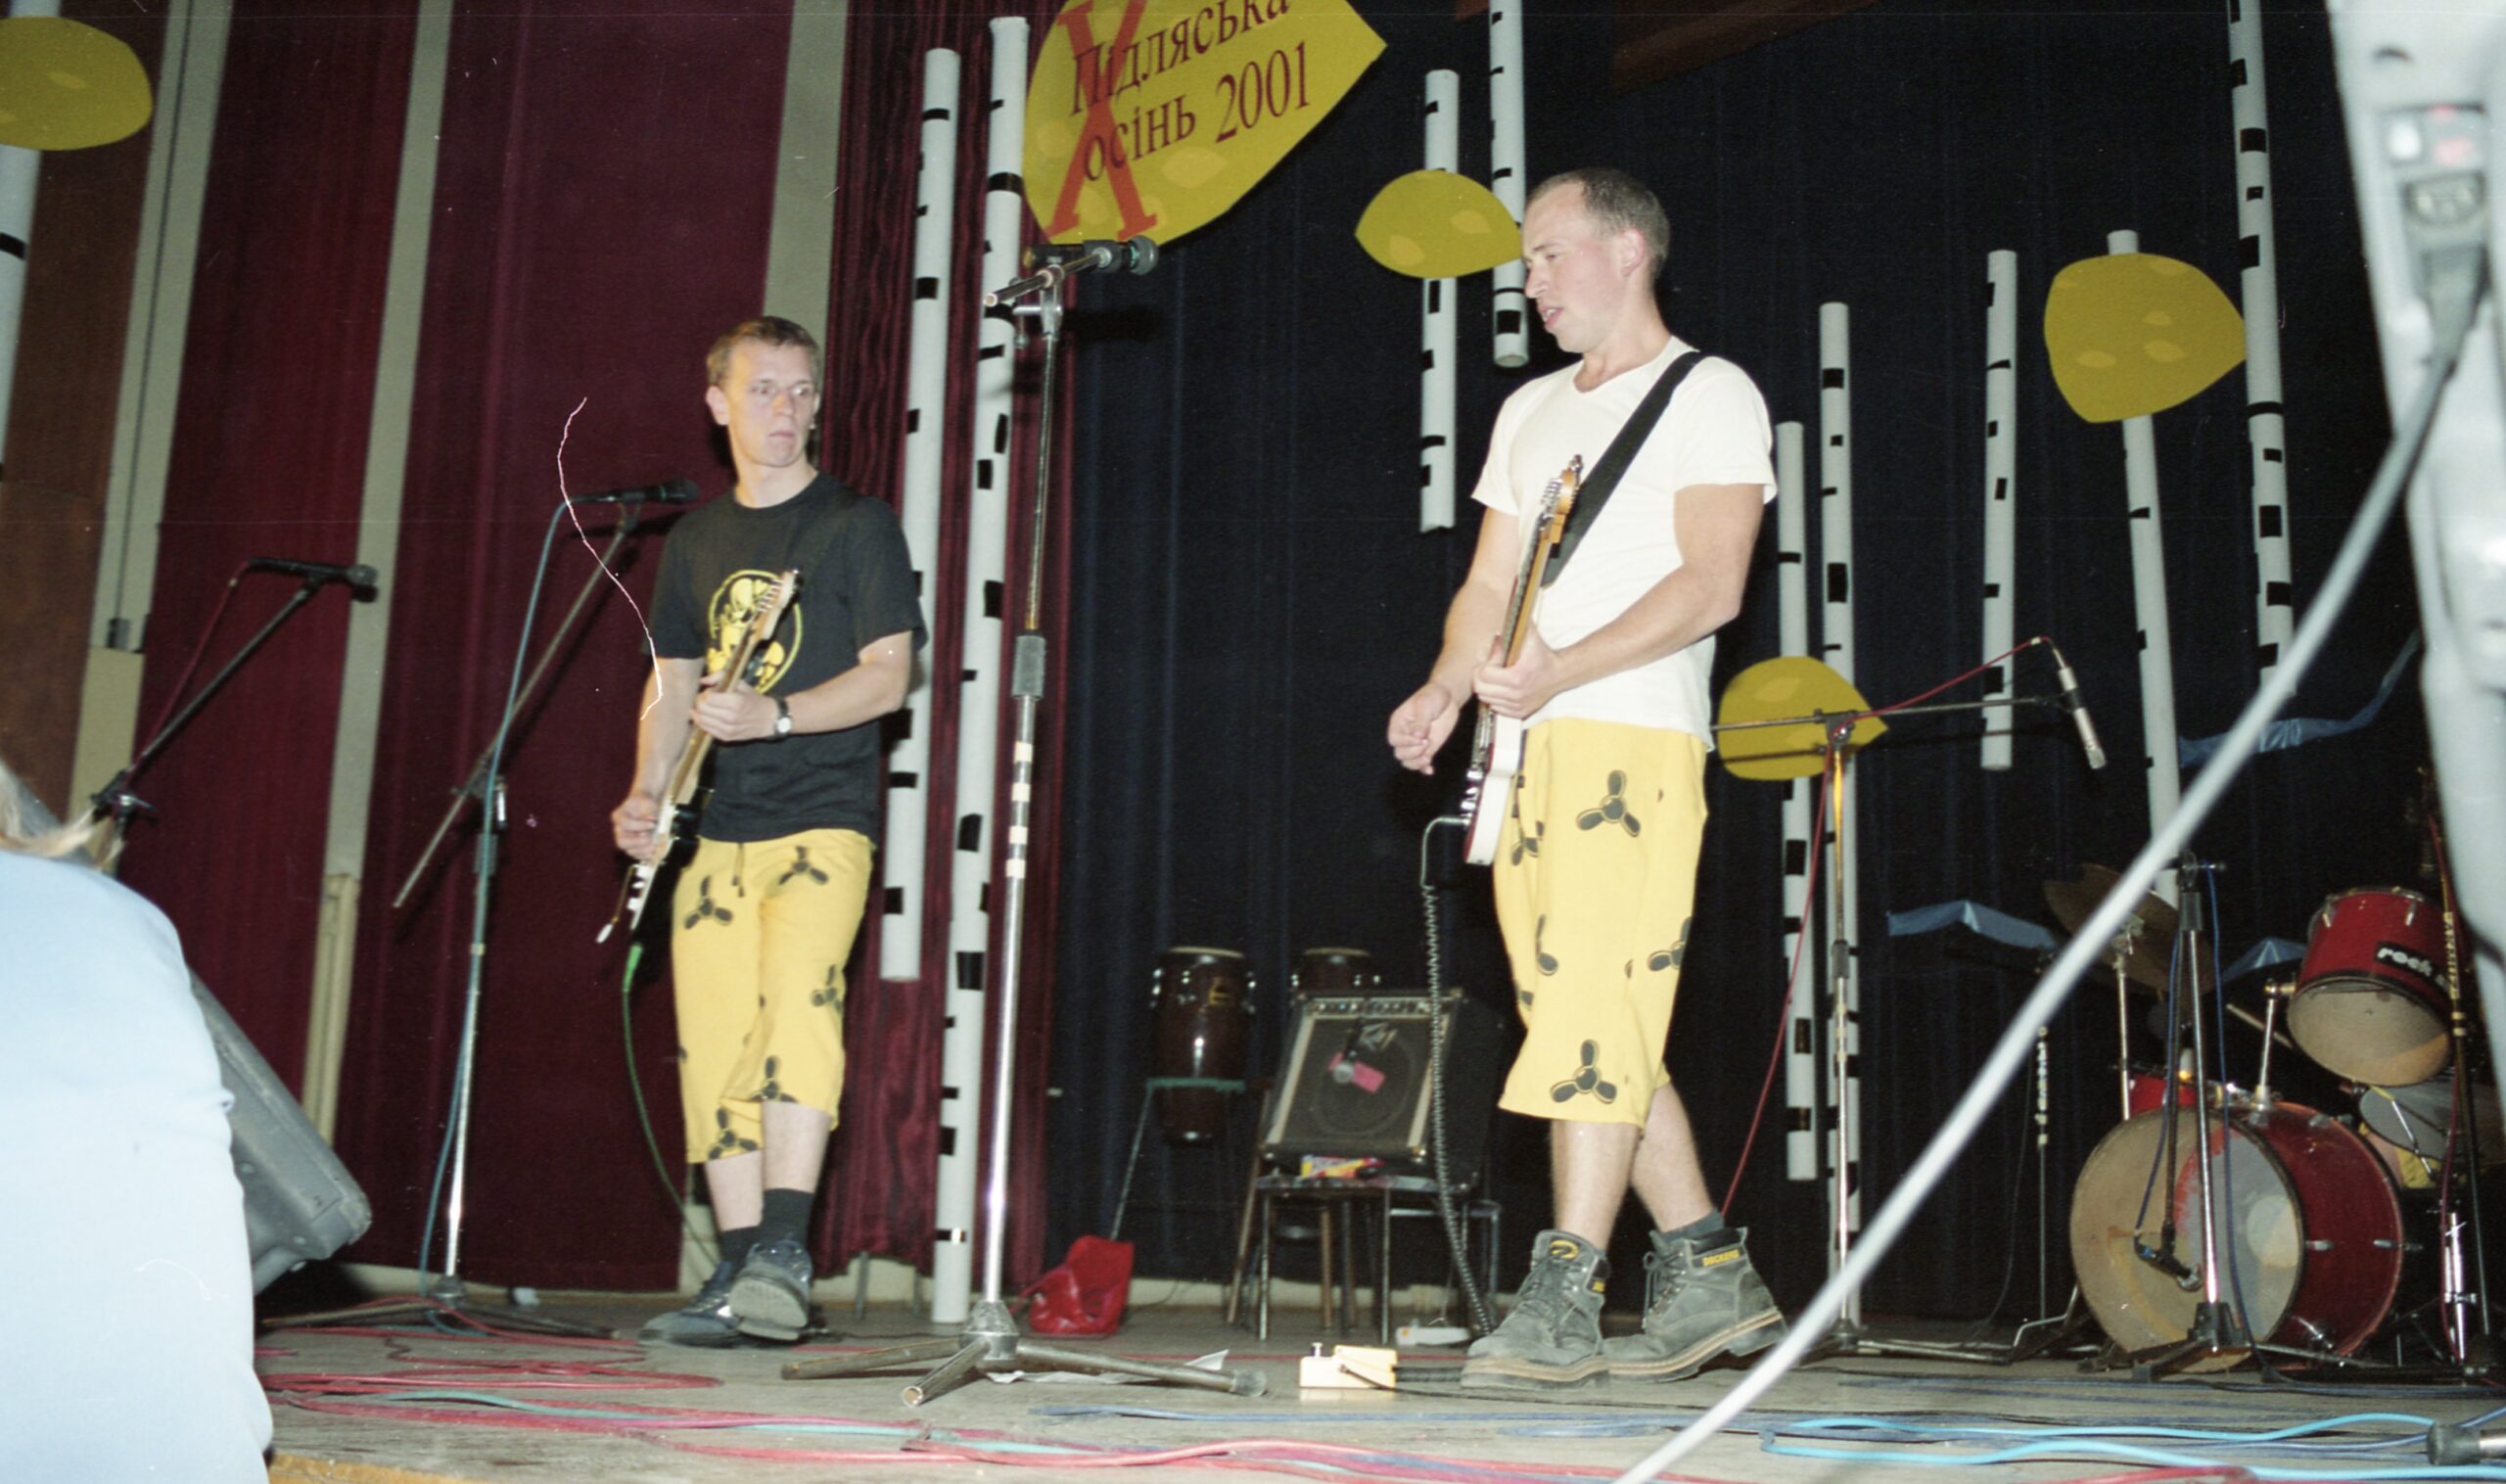 Festiwal „Podlaska Jesień” 2001 – koncert Ot Vinta w Bielsku Podlaskim